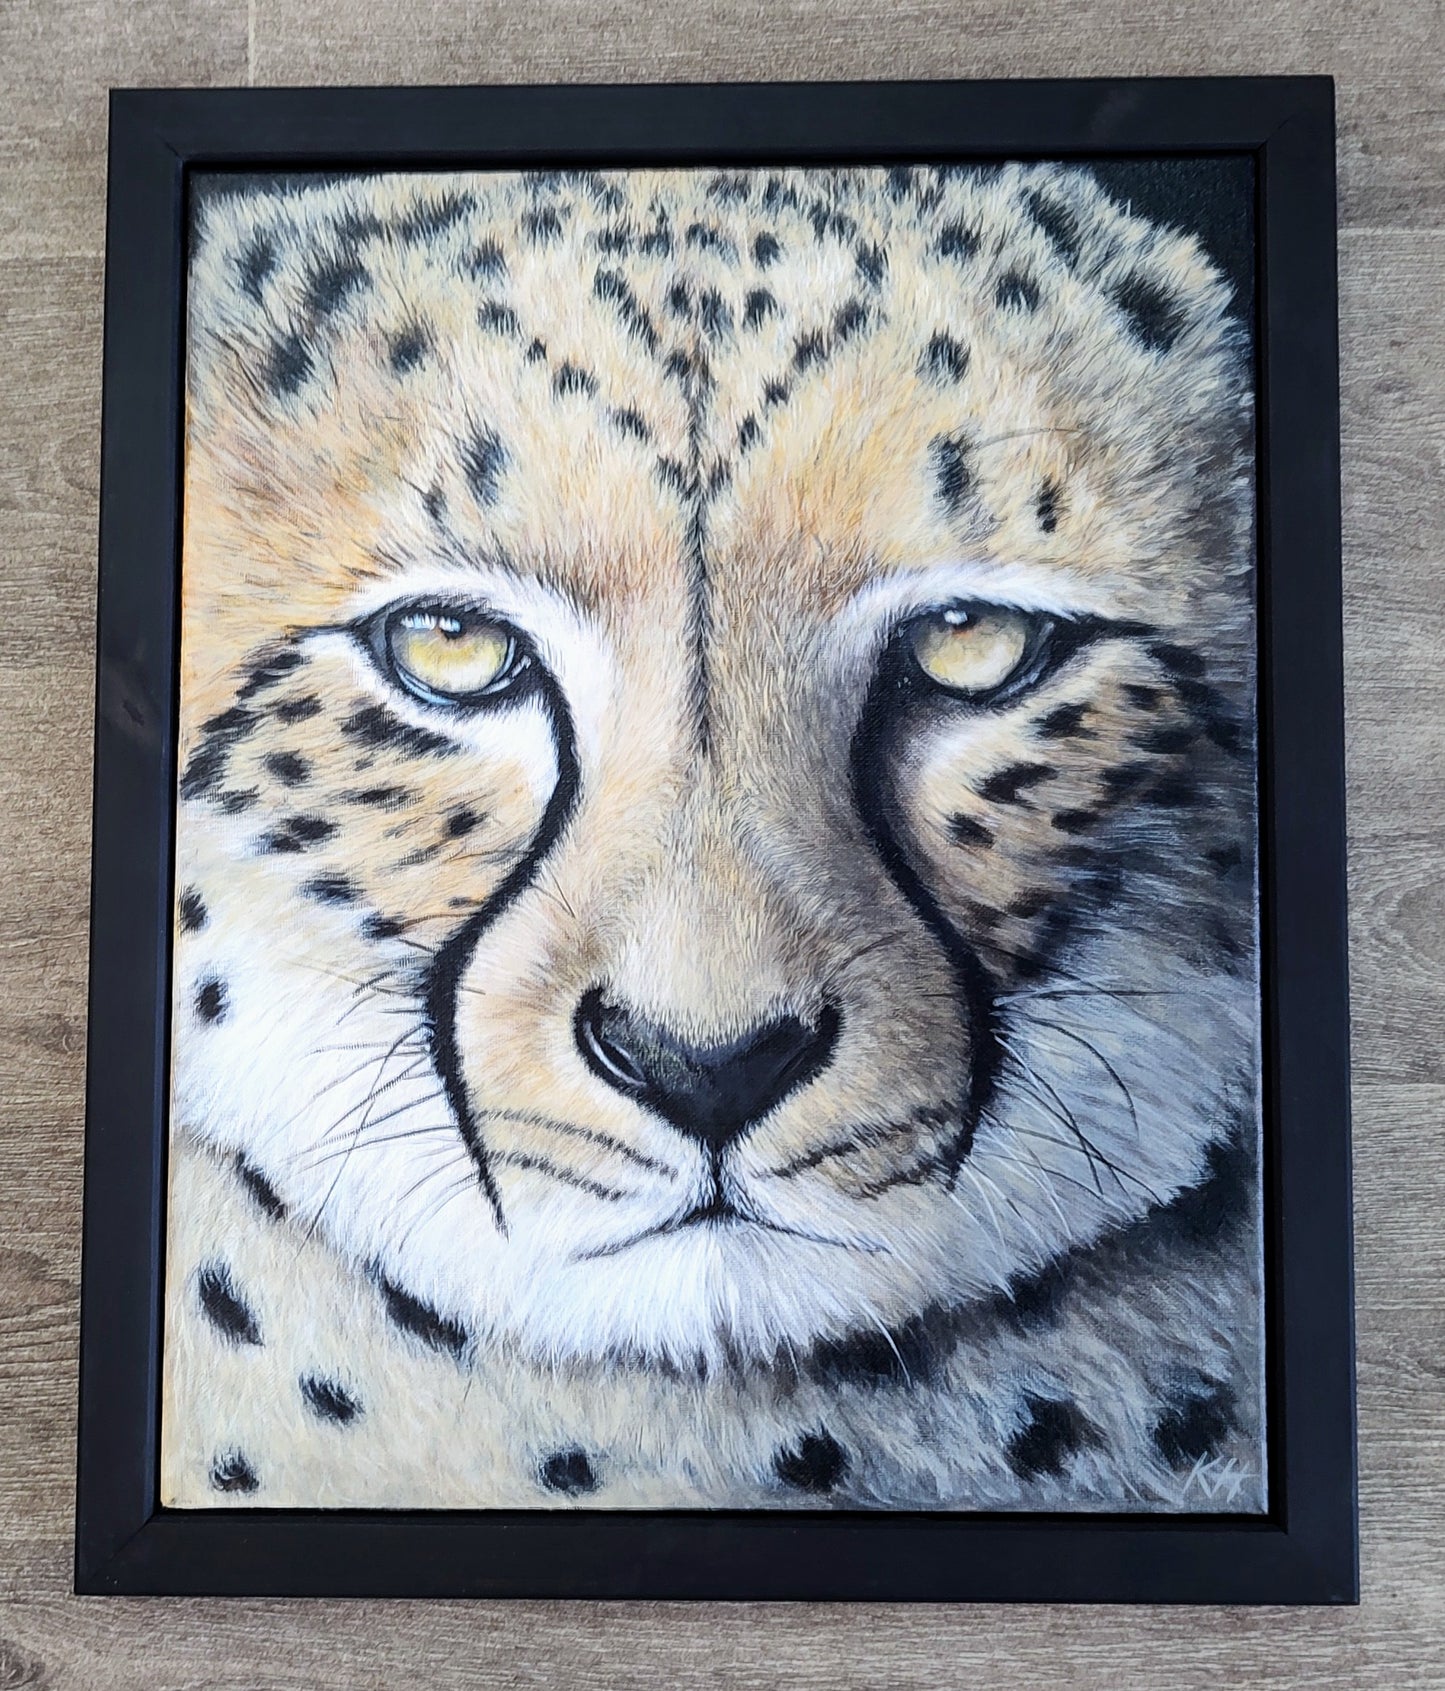 Keiran Hodge- Focus, Original Framed Acrylic on Canvas of a Cheetah